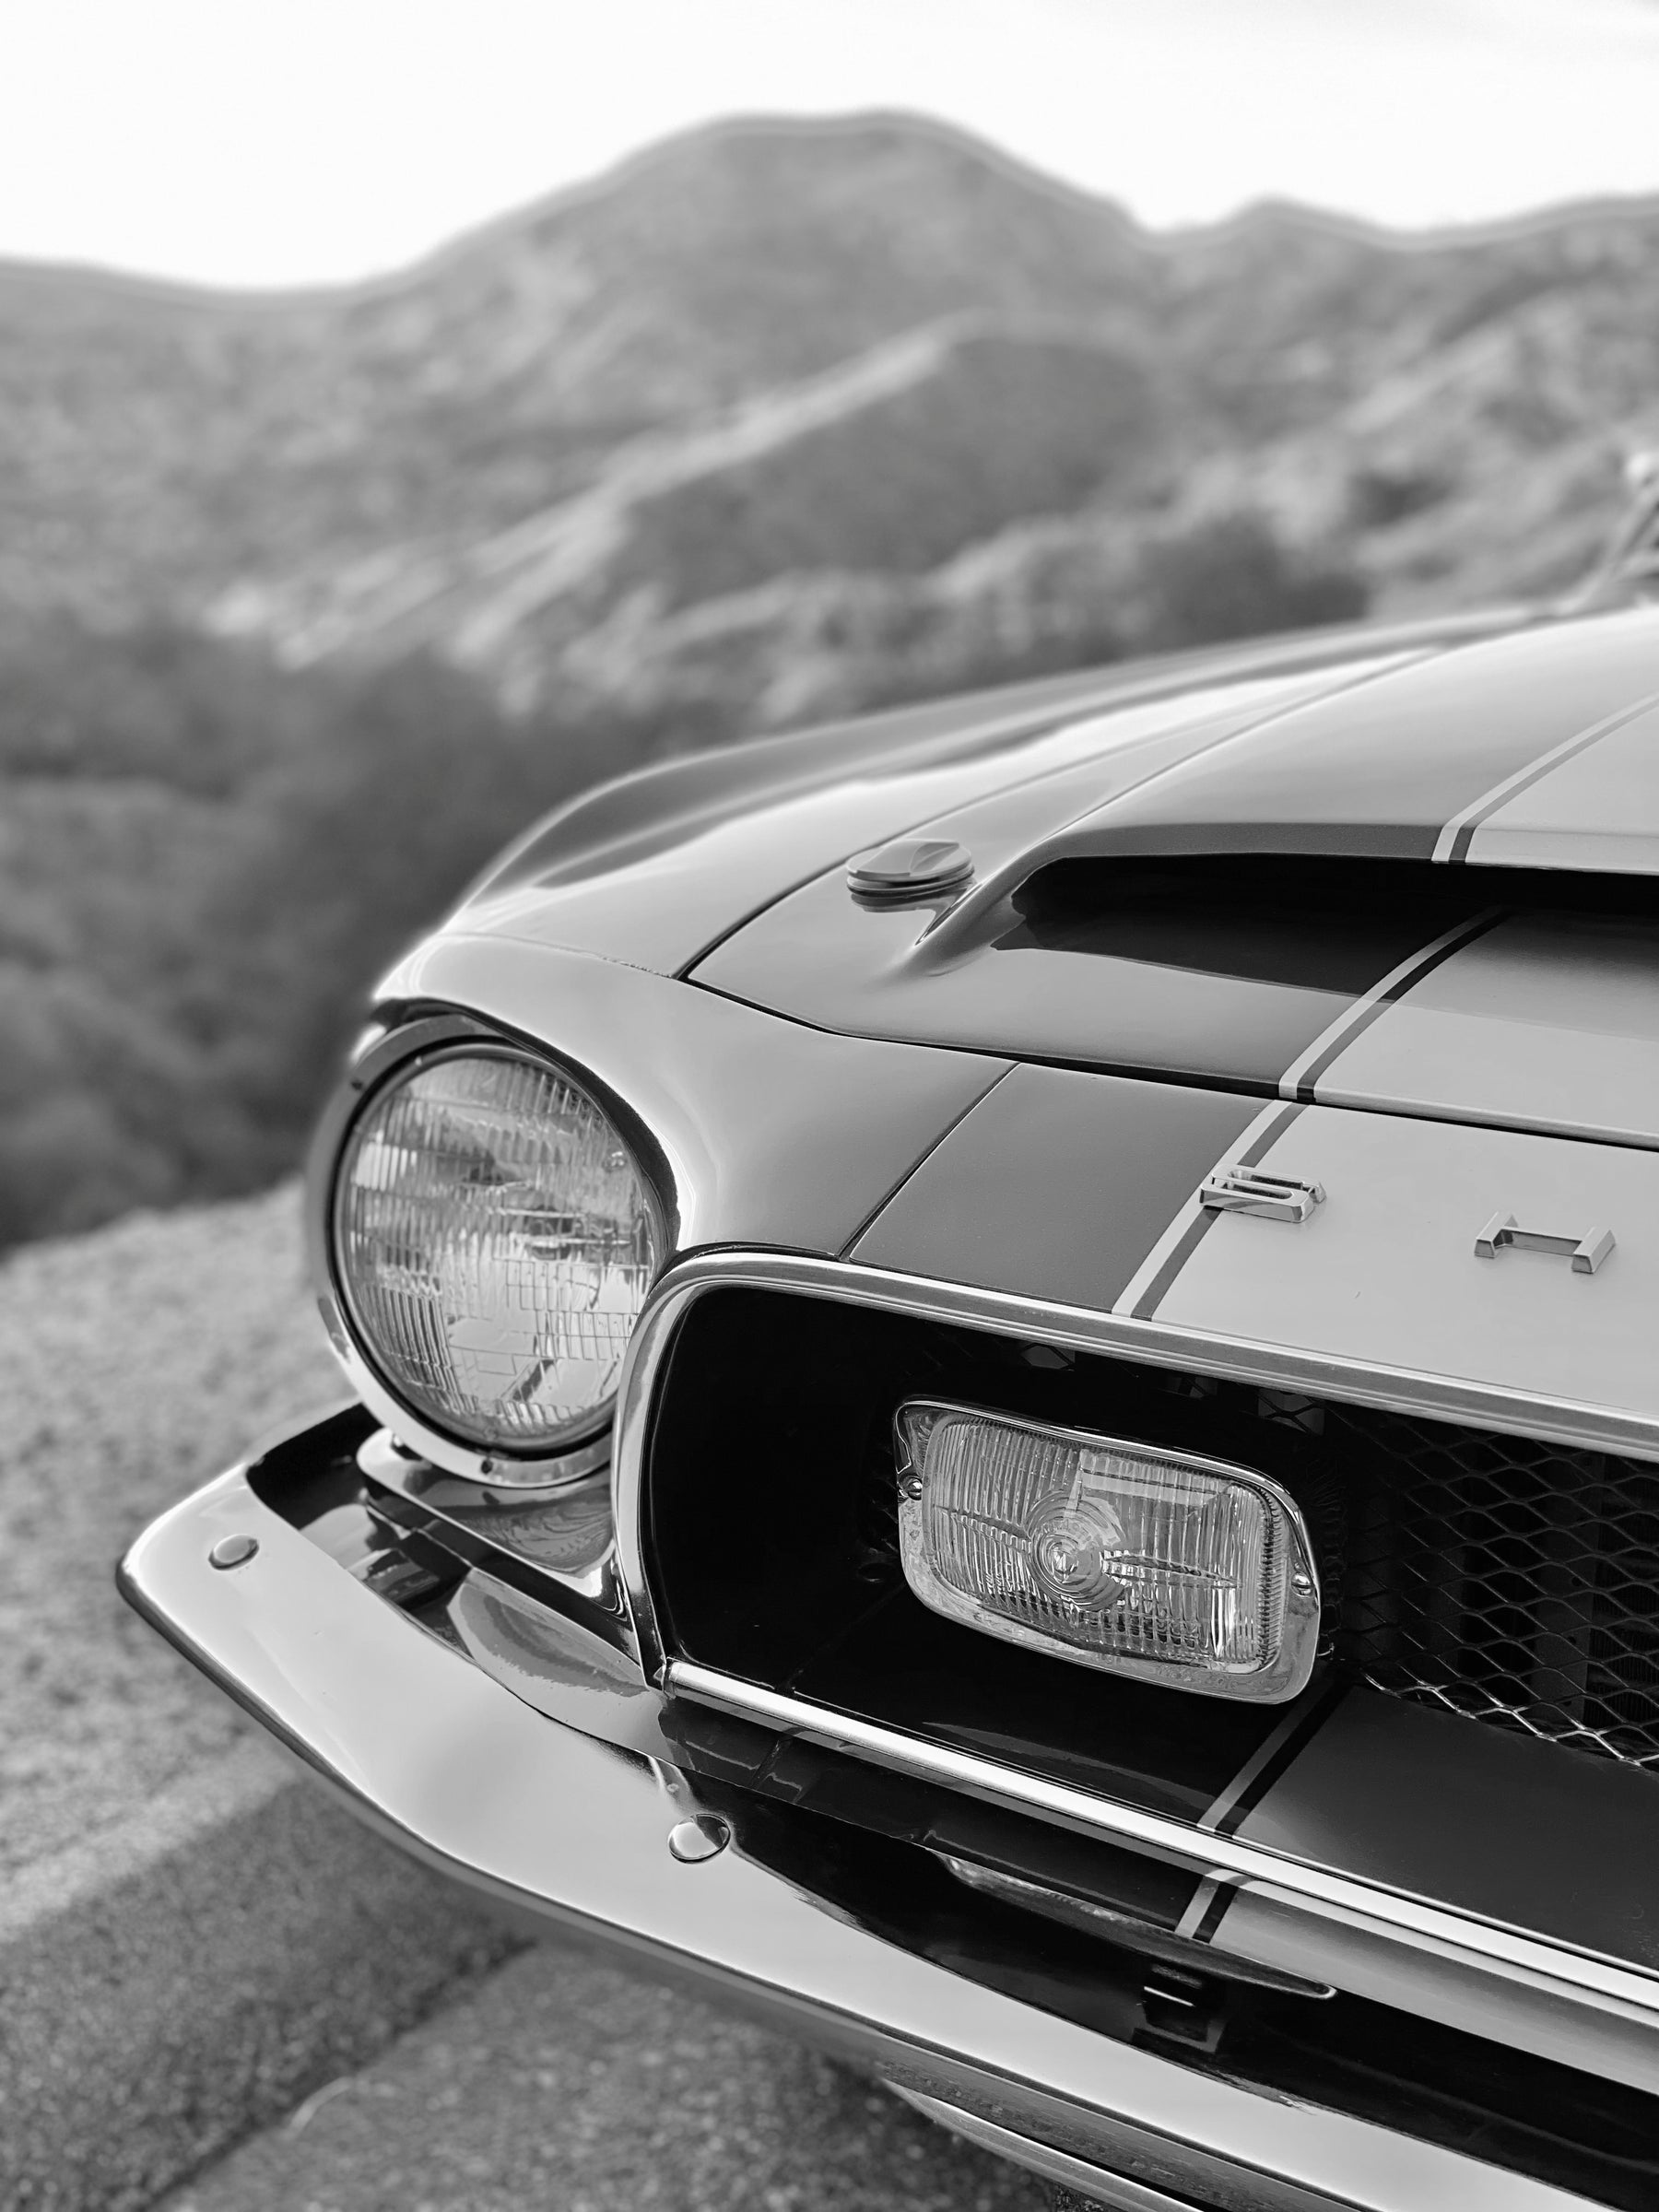 1968 Shelby Mustang GT350H FINE ART PRINT